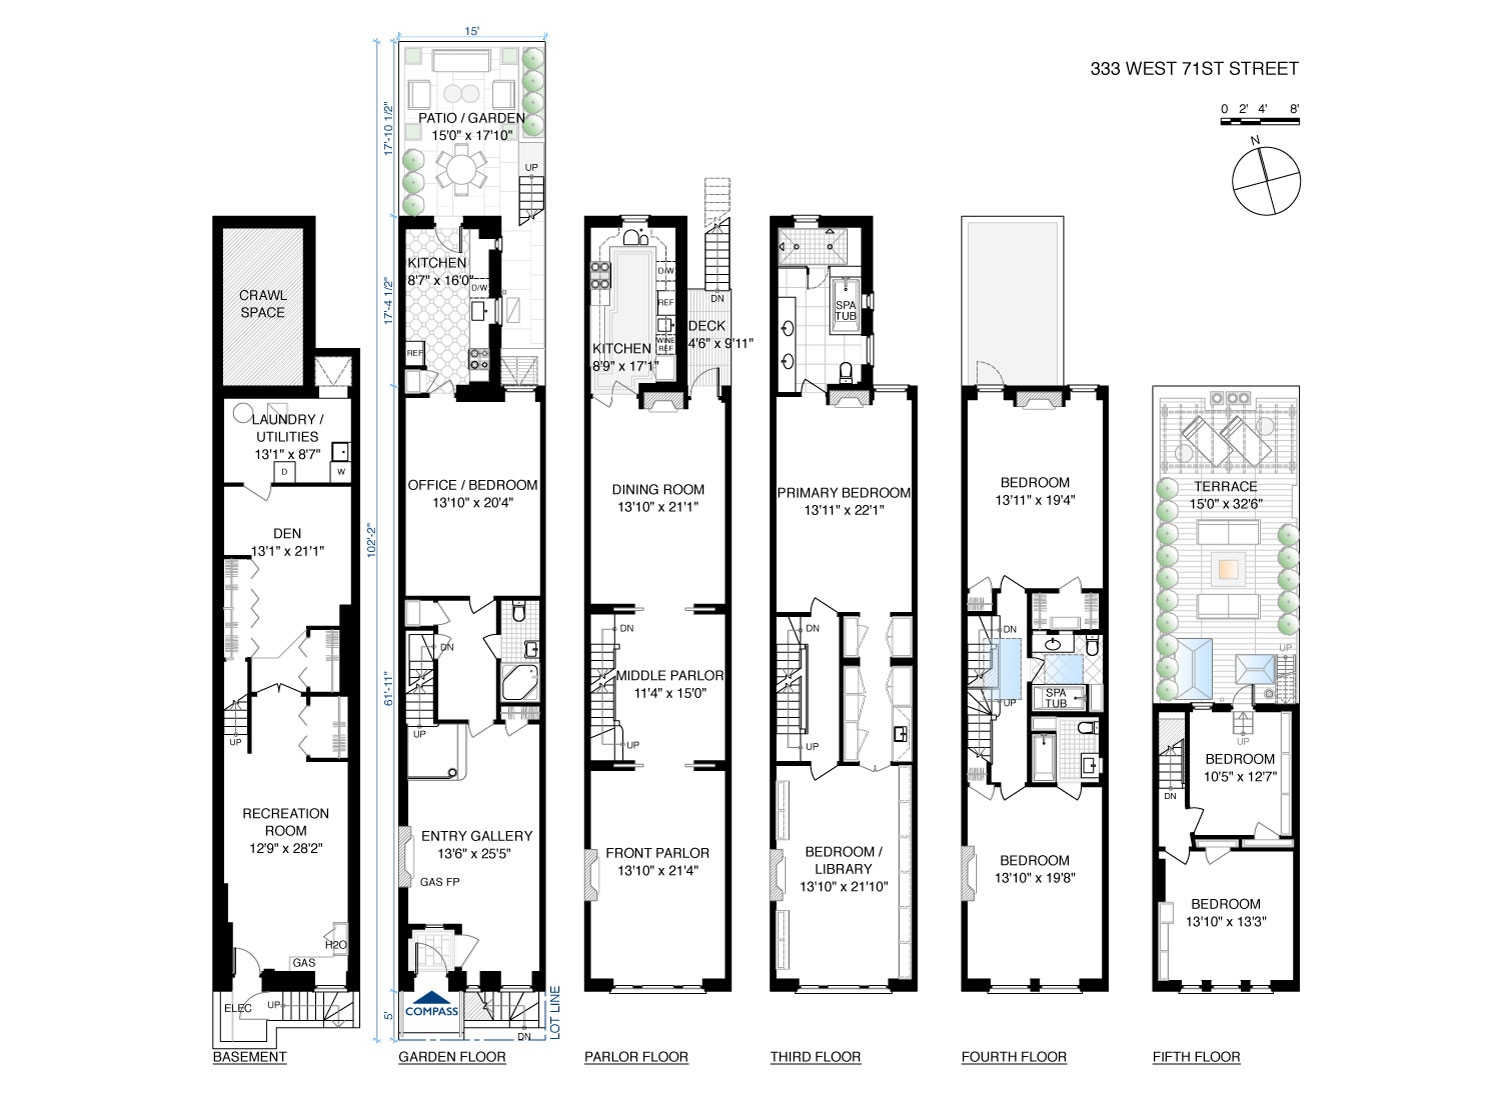 Floorplan for 333 West 71st Street